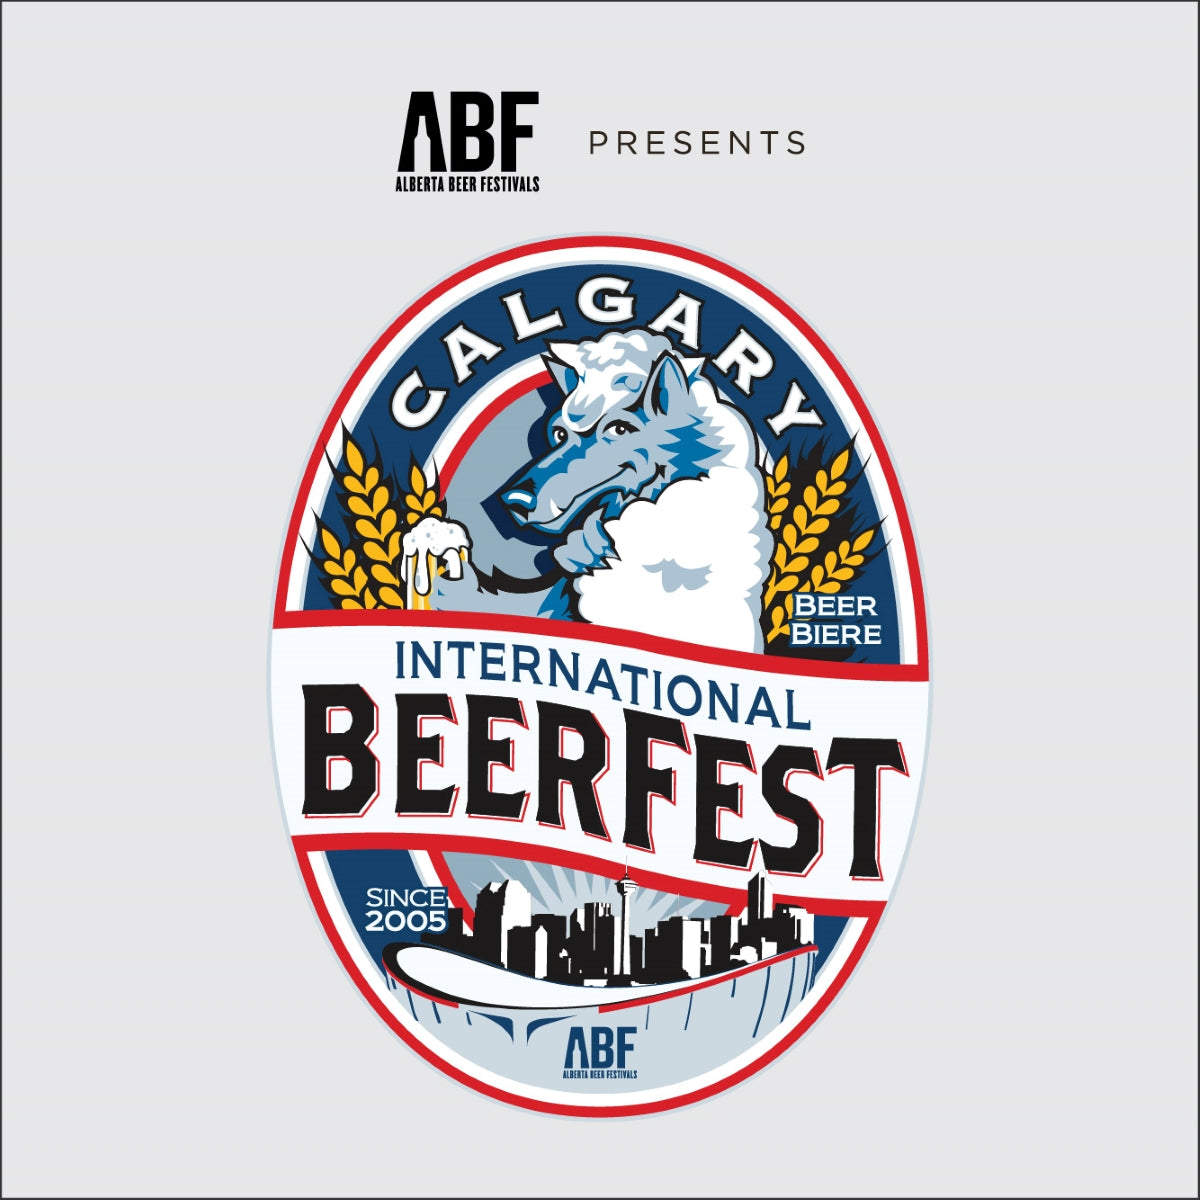 Alberta Beer Festivals - Calgary International Beerfest